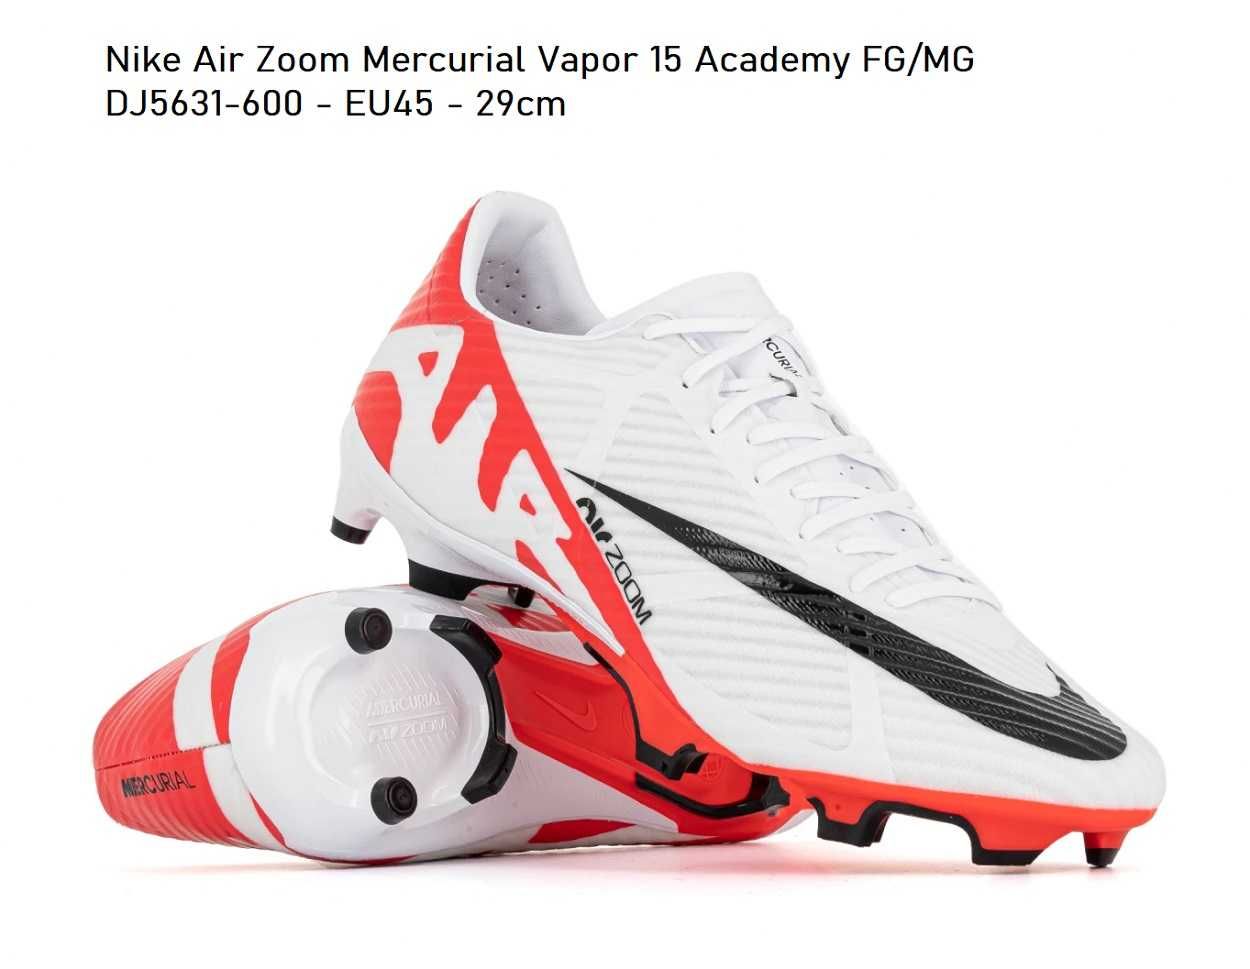 Ghete fotbal Nike Air Zoom Mercurial Vapor 15 Academy Neymar